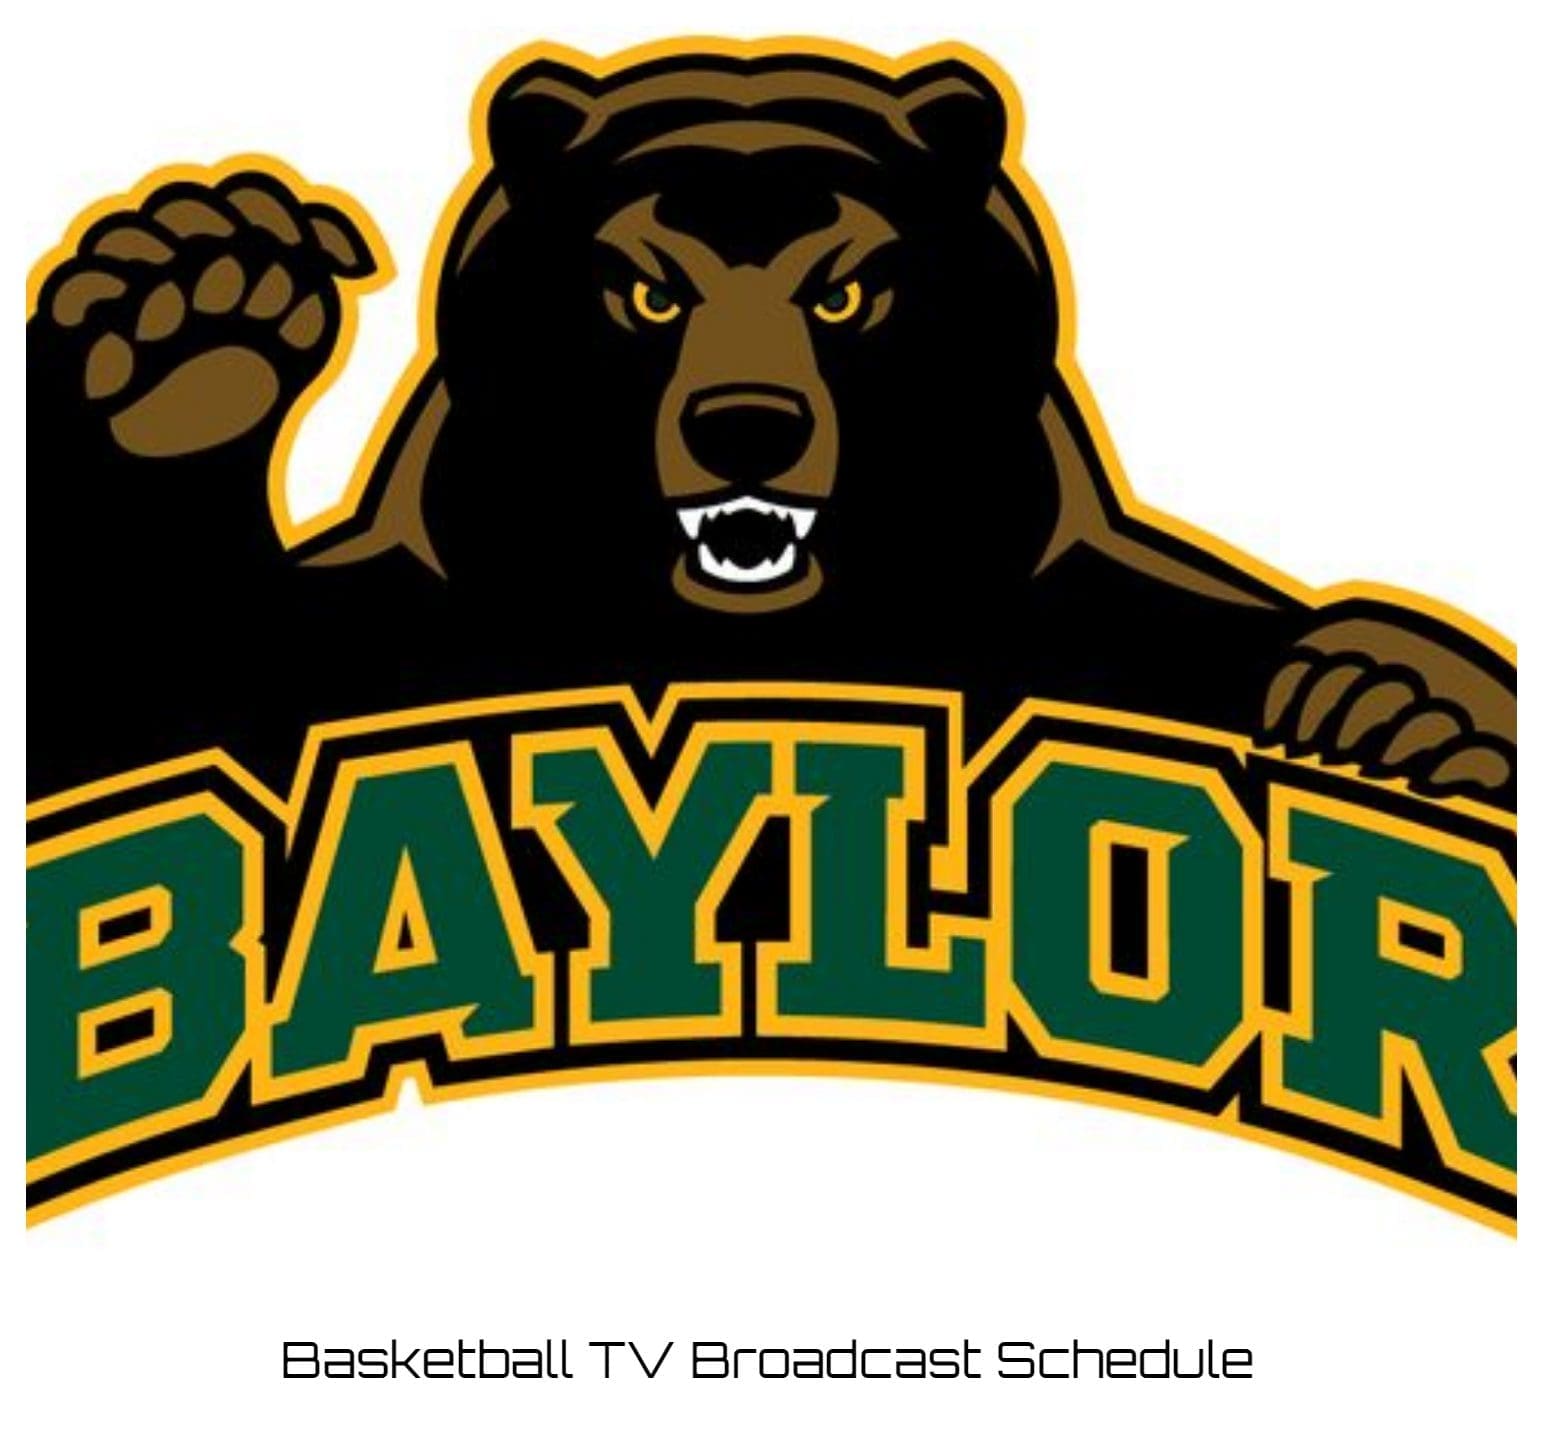 Baylor Bears Basketball TV Broadcast Schedule